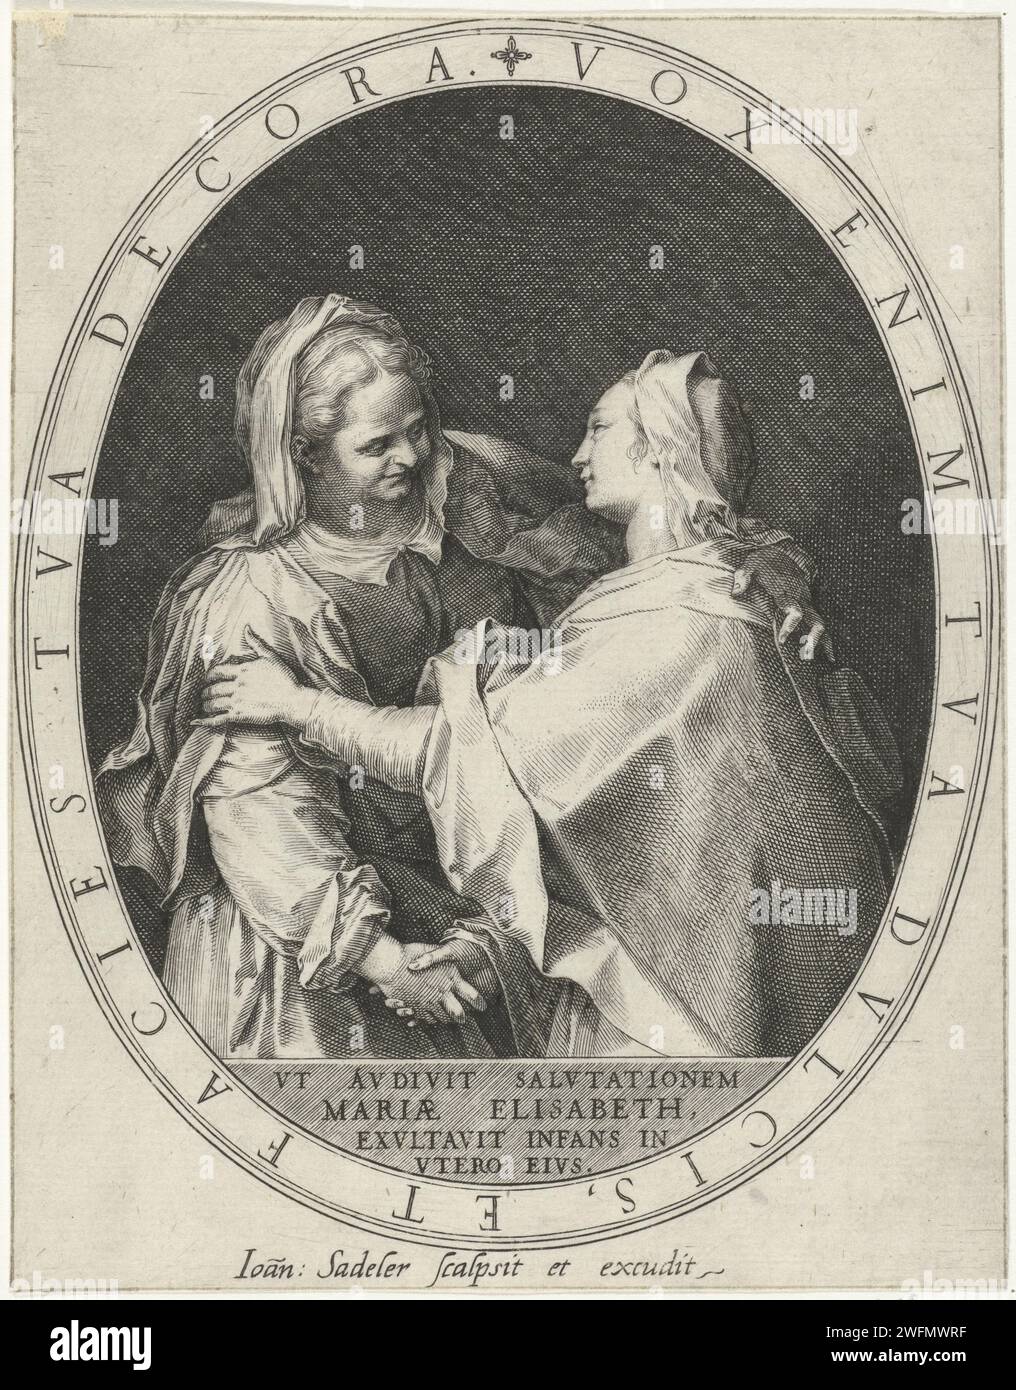 Visita, Johann Sadeler (i), 1560 - 1600 stampa Maria ed Elisabet si abbracciano e stringono la mano. Carta sconosciuta che incide Maria ed Elisabetta che stringono la mano Foto Stock